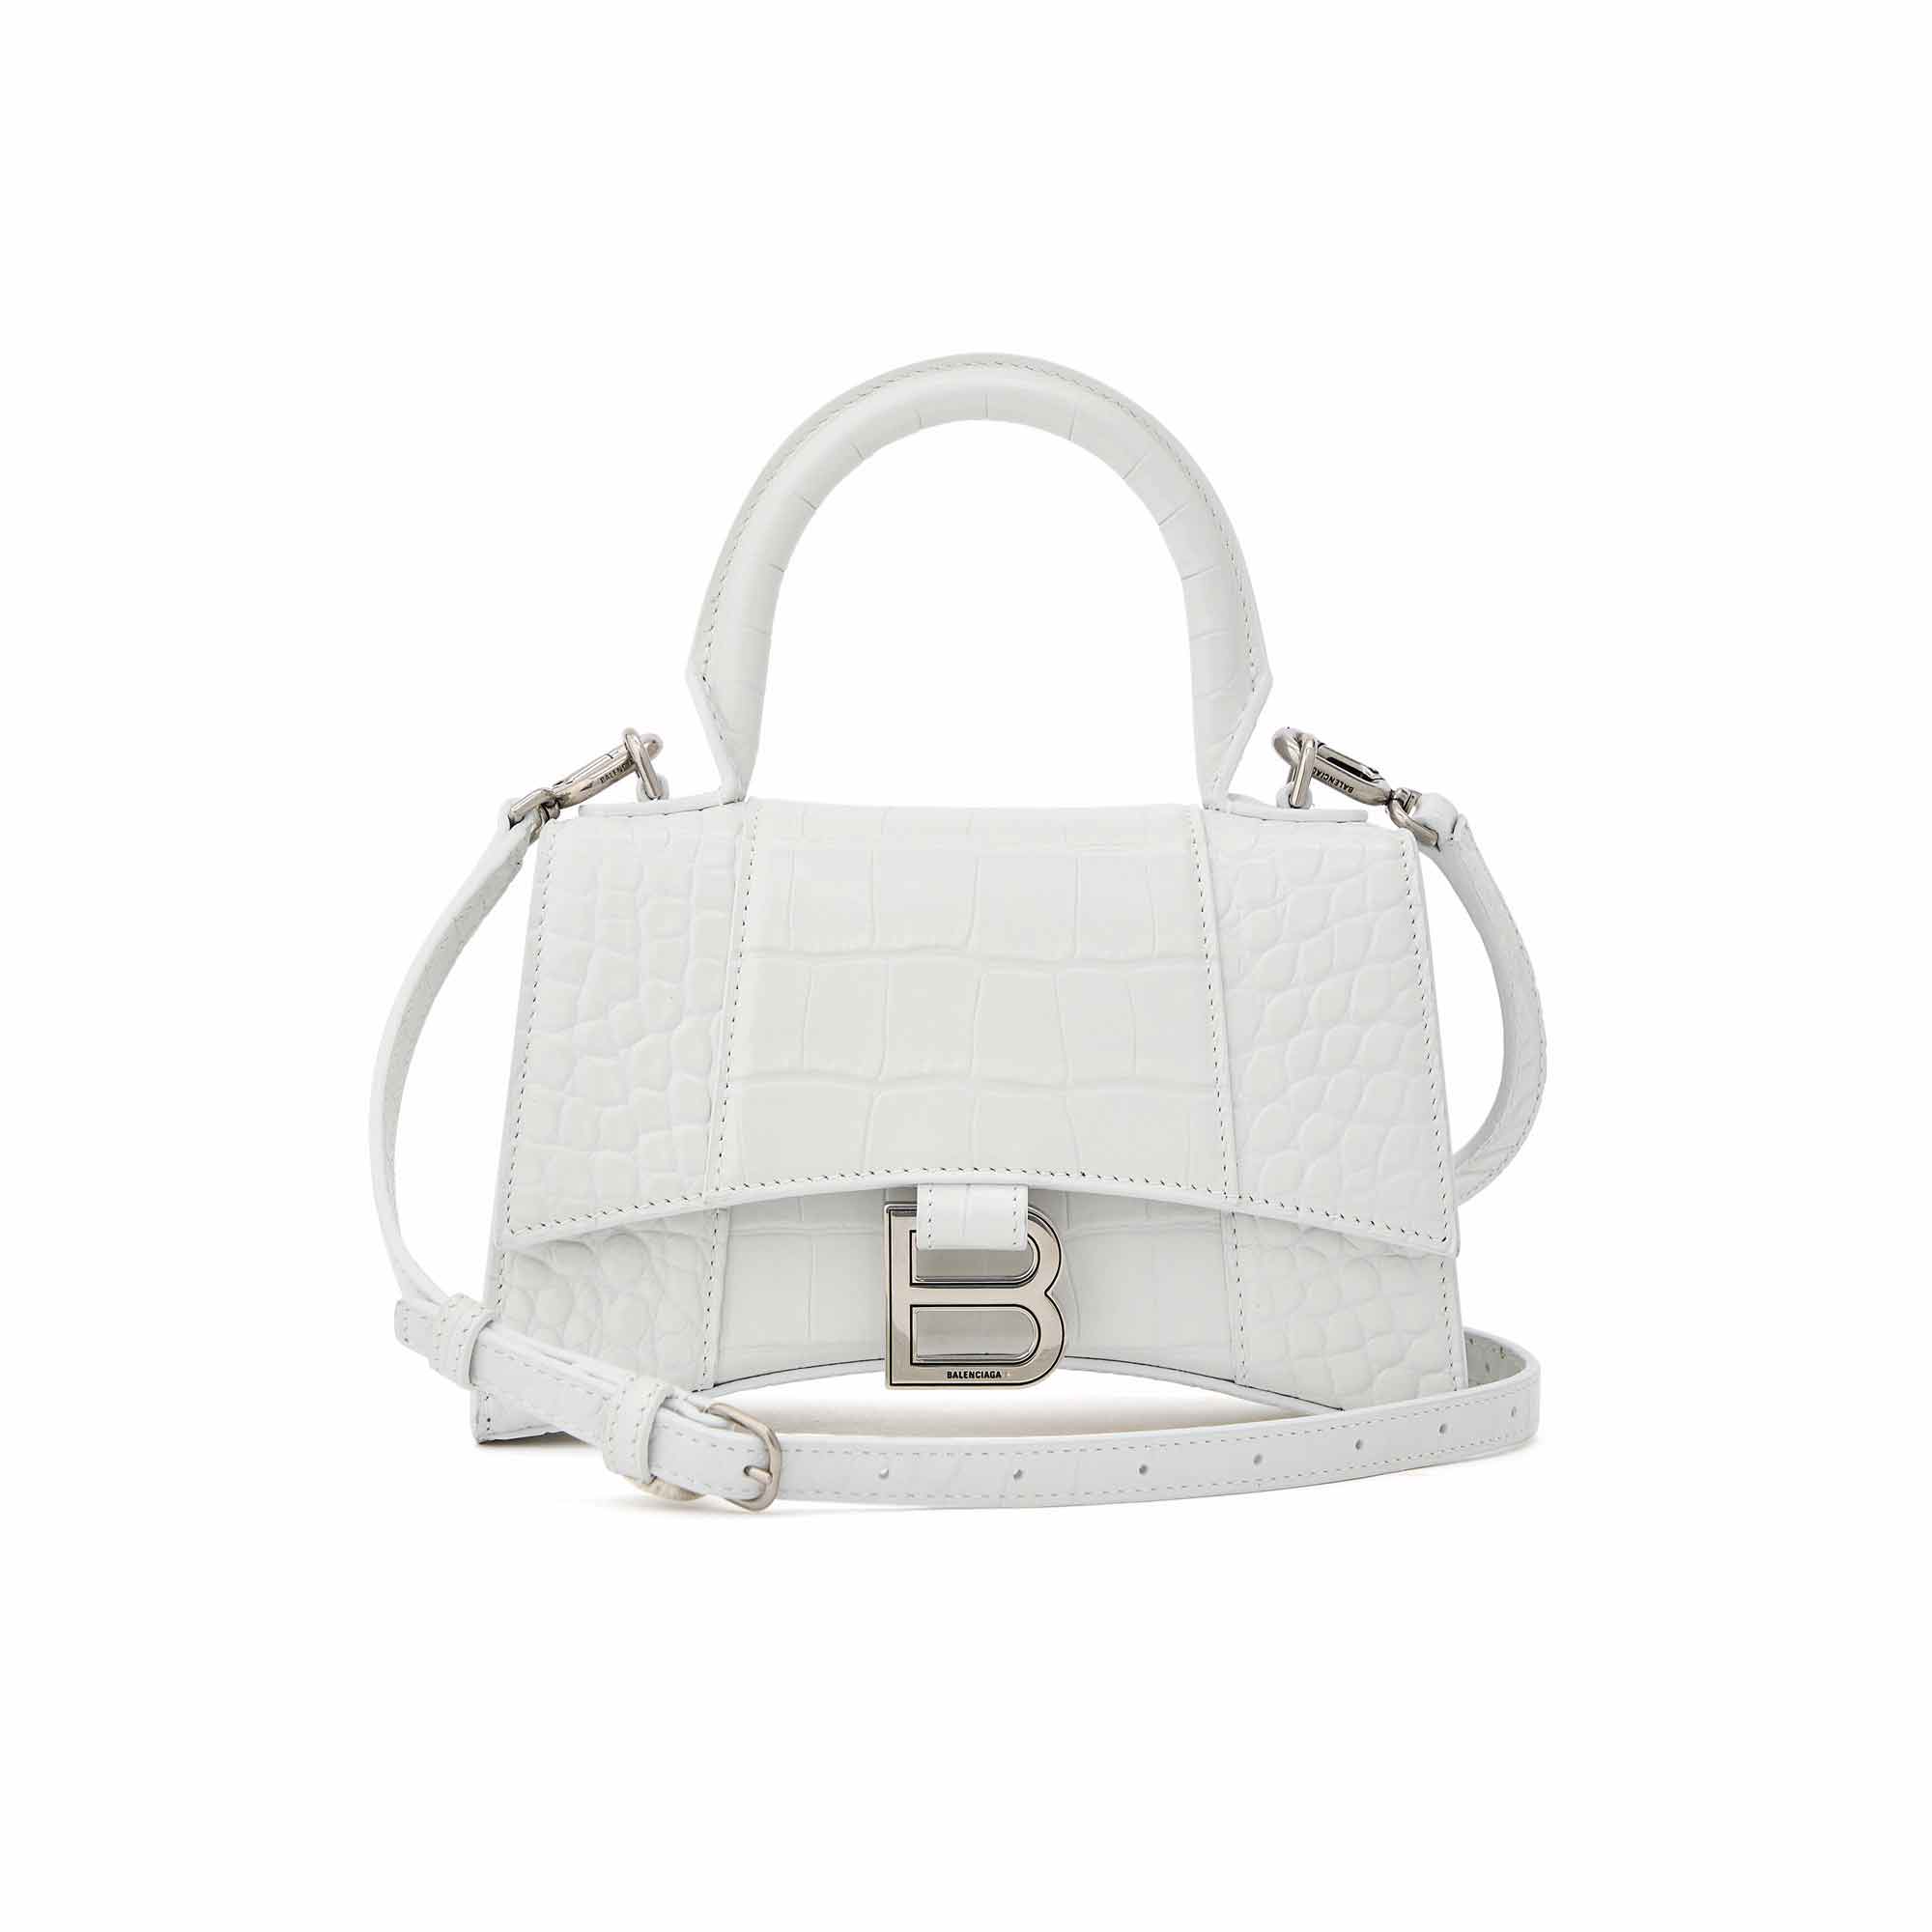 Balenciaga Bags Australia  Balenciaga Handbags  Tote Bags Online   Parlour X